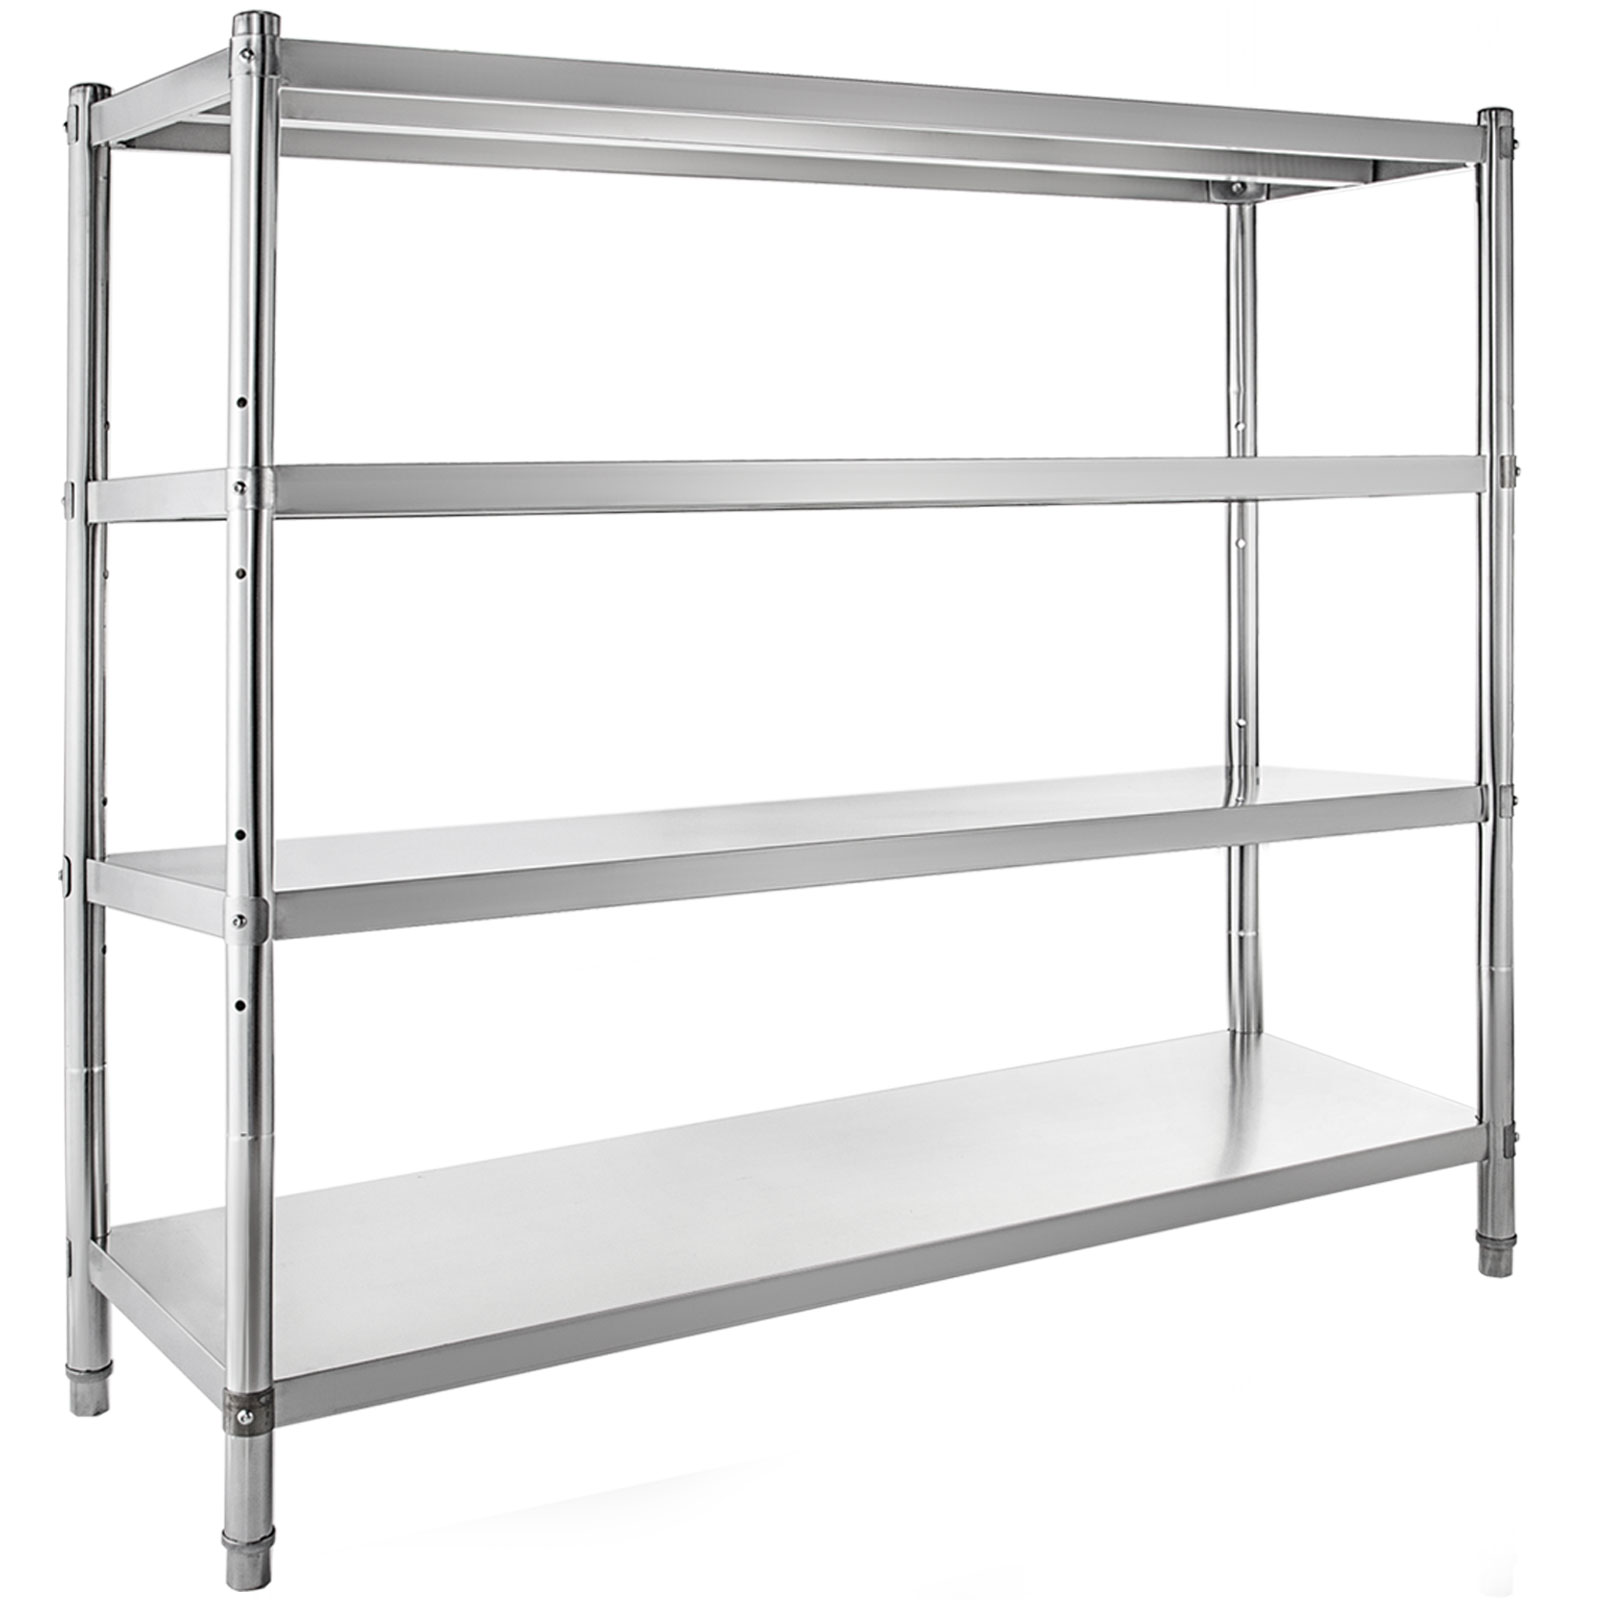 Kitchen Shelves Shelf Rack Stainless Steel Shelving Organizer Units 4/5 Tier 